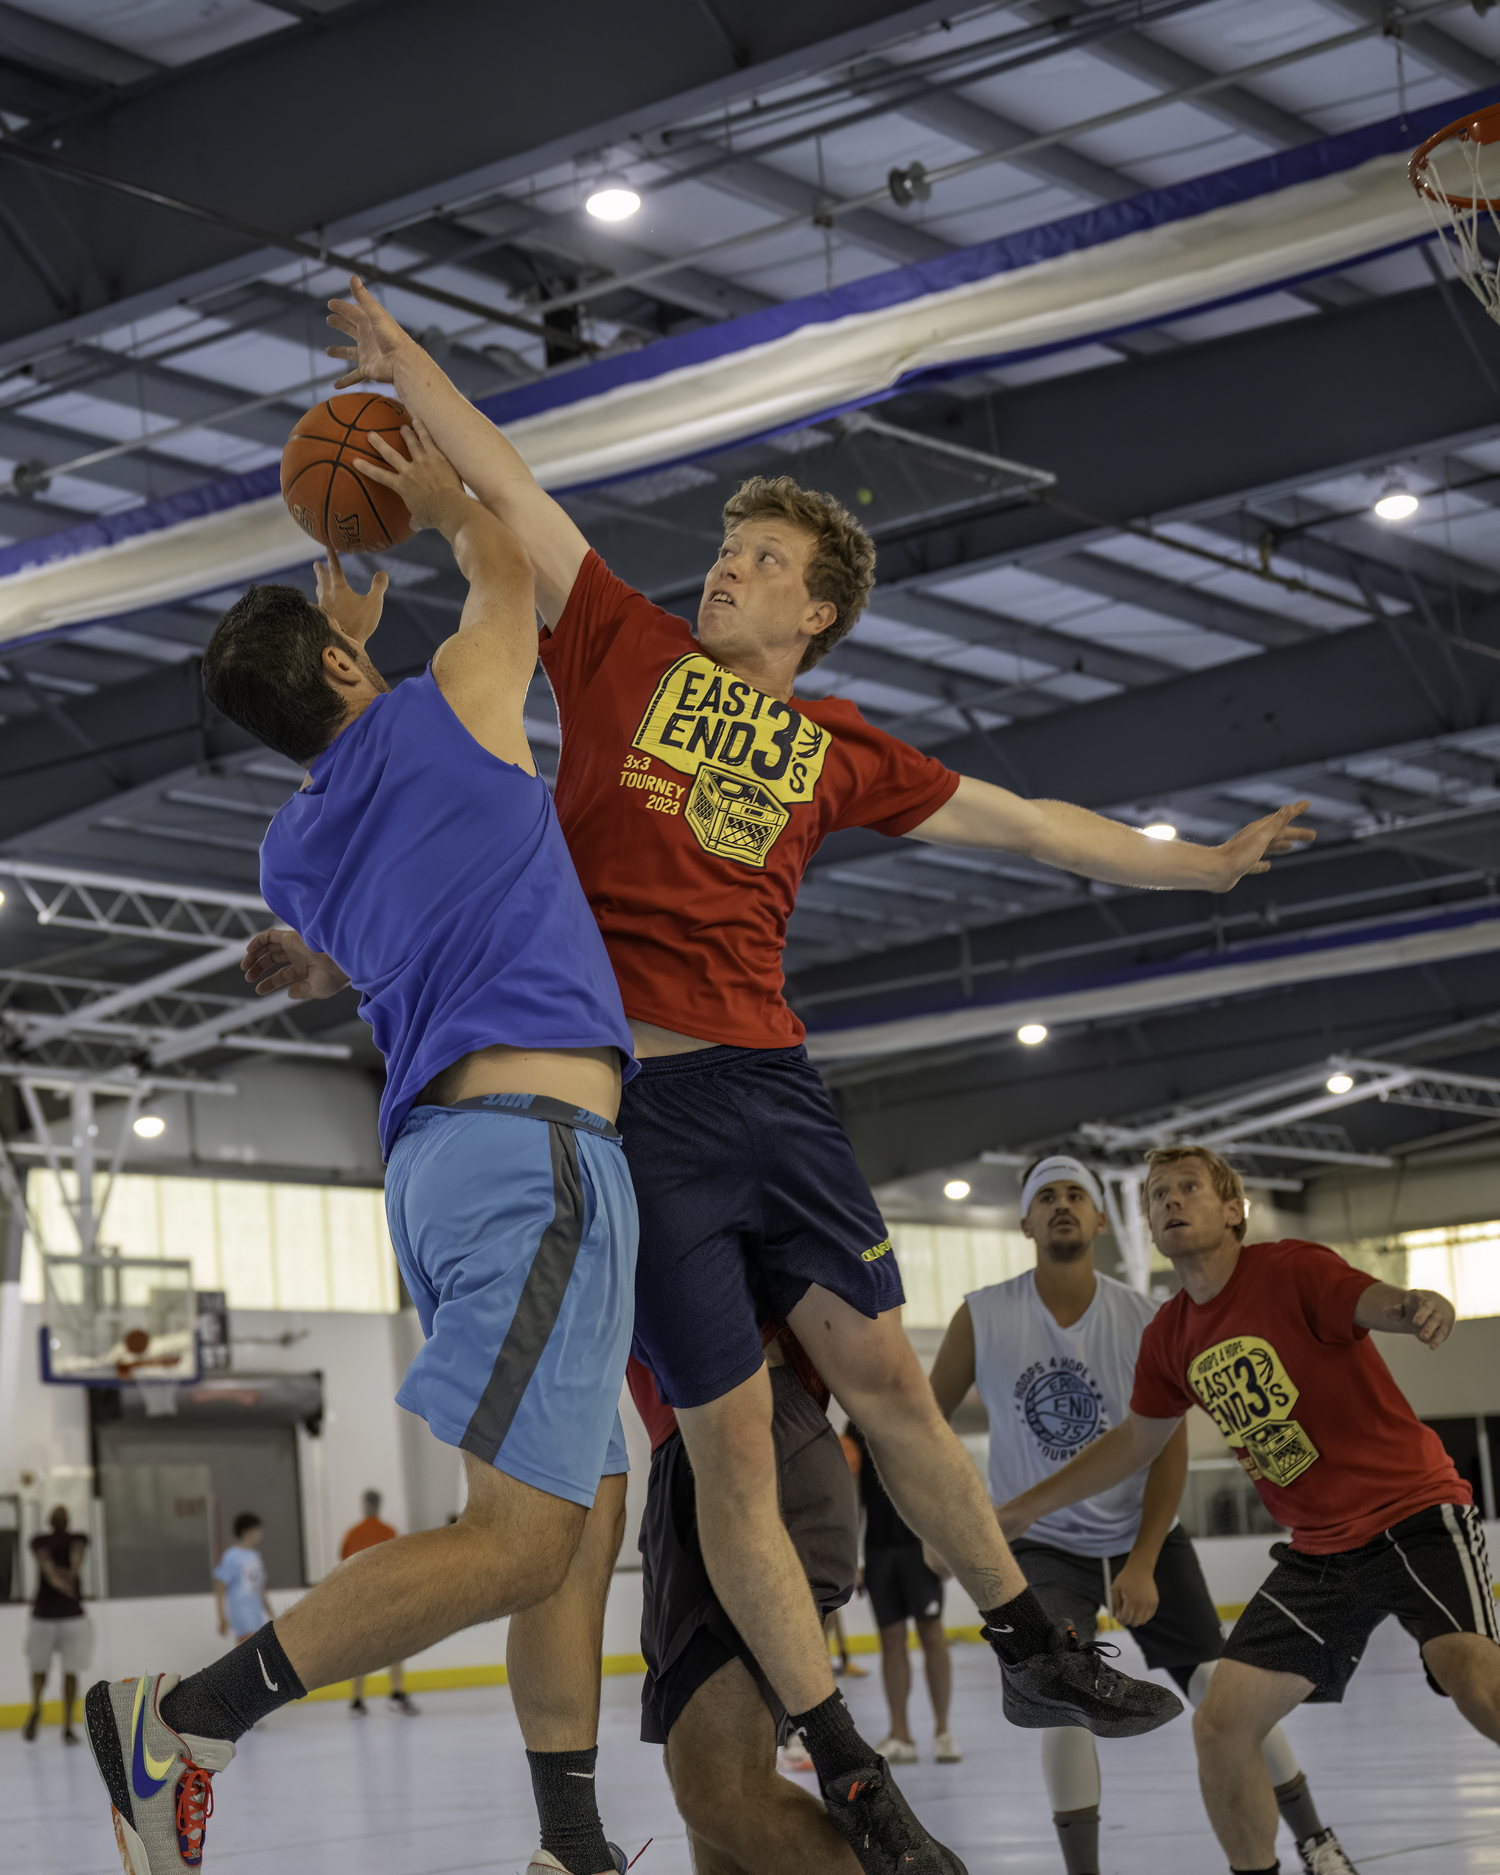 The Hoops 4 Hope 3-on-3 basketball tournament was held at Sportime Amagansett on Saturday.    MARIANNE BARNETT